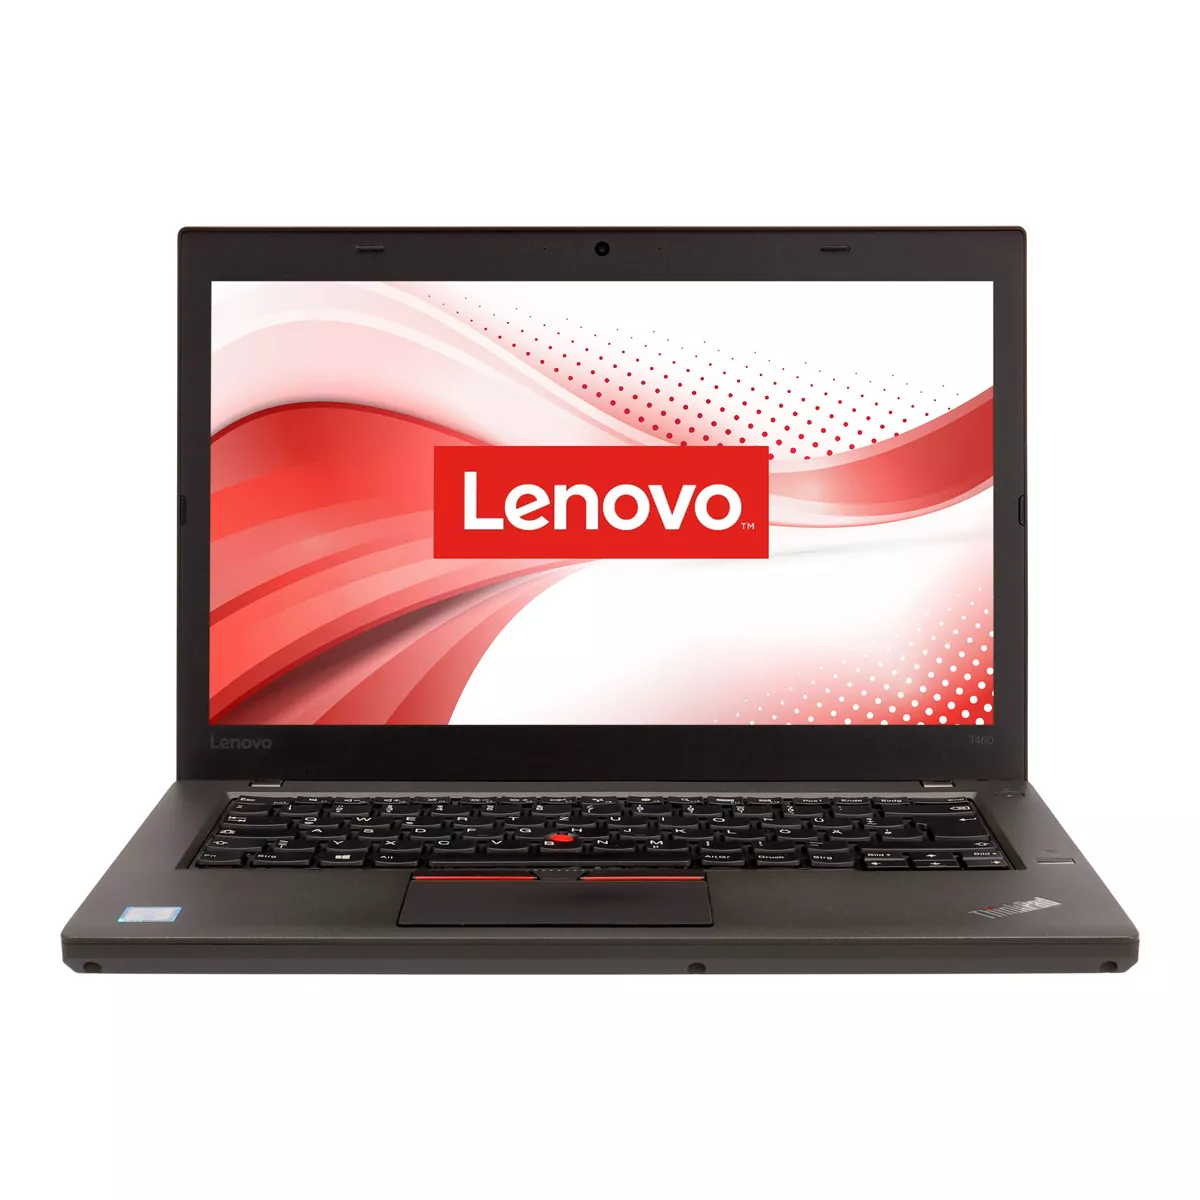 Lenovo ThinkPad T480 Core i7 8650U Full-HD Touch 32 GB 1 TB M.2 nVME SSD Webcam A+